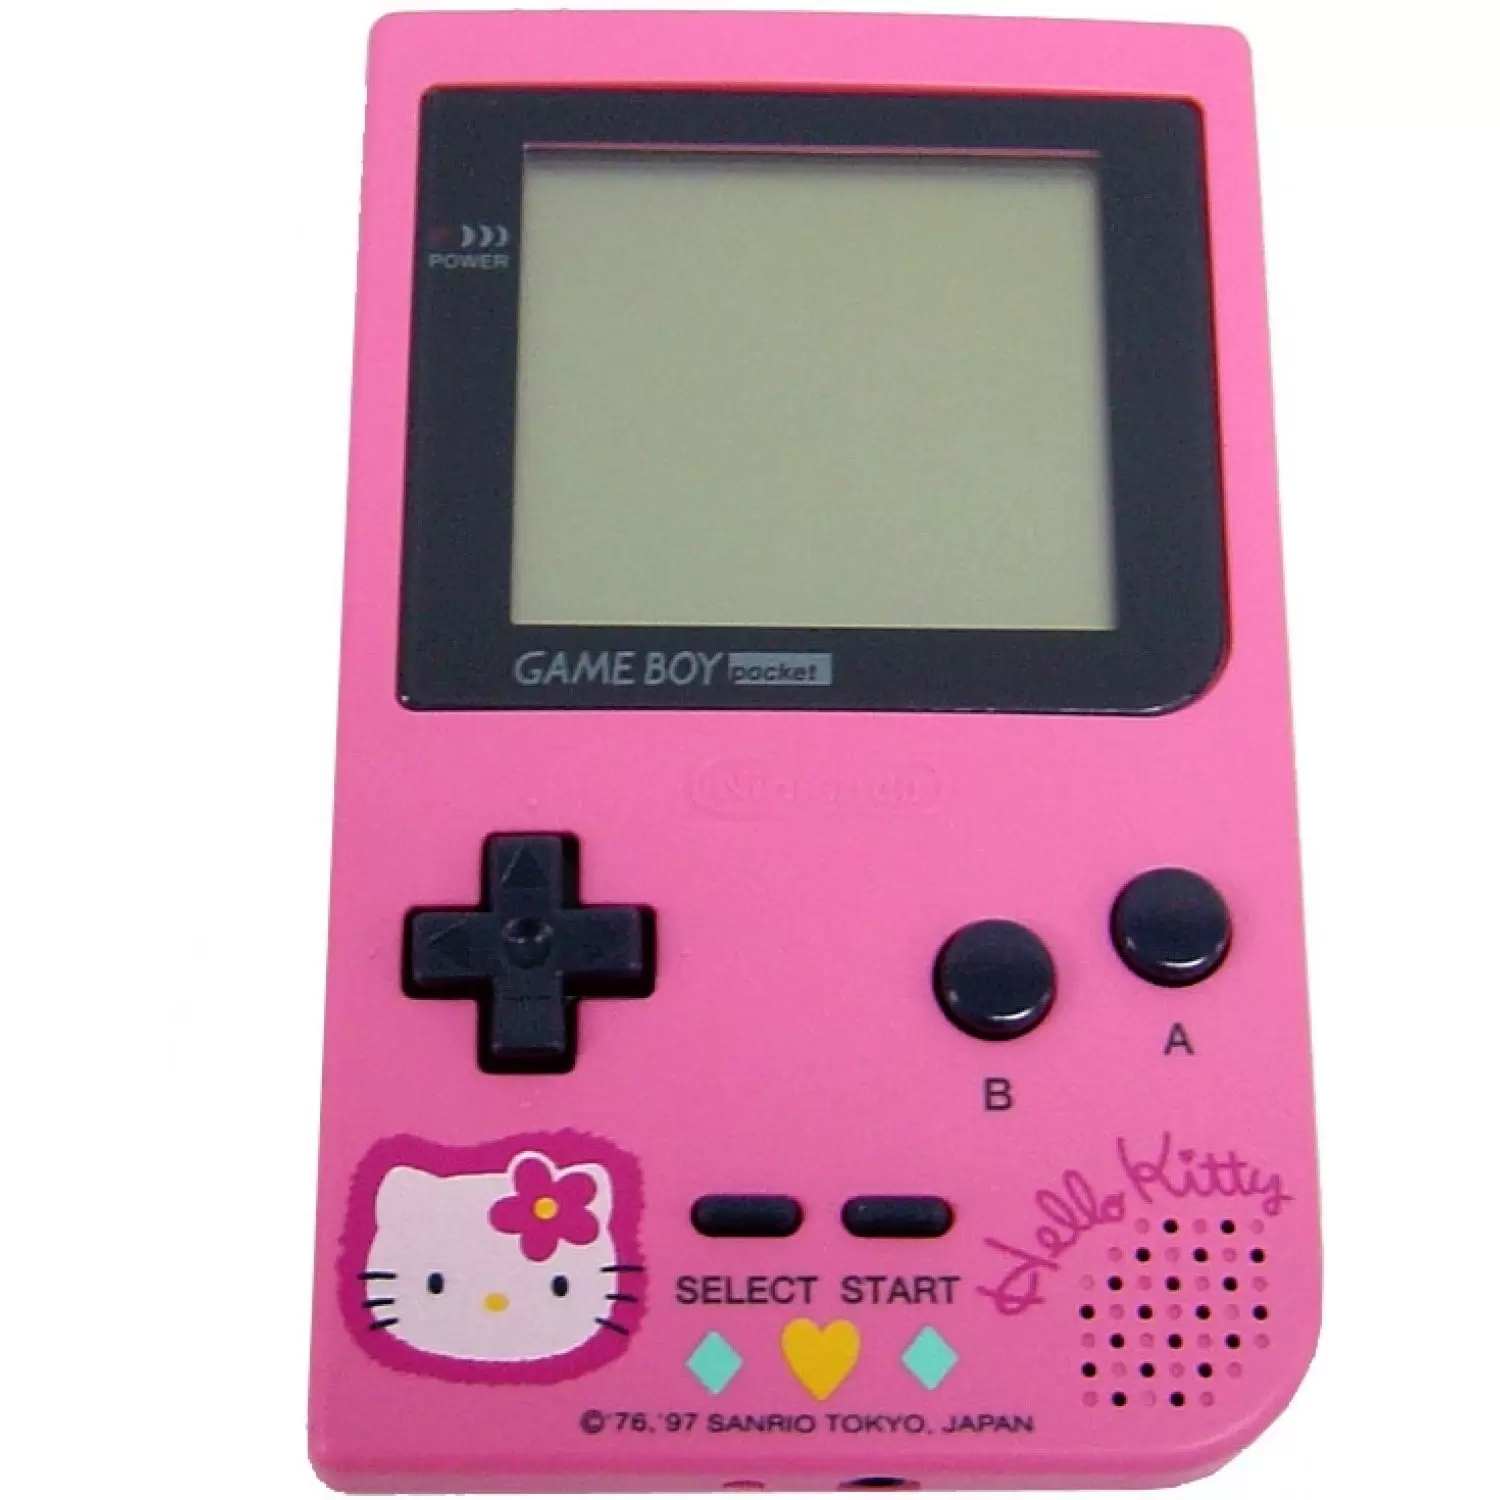 Game Boy Pocket - Game Boy Pocket Pink Hello kitty